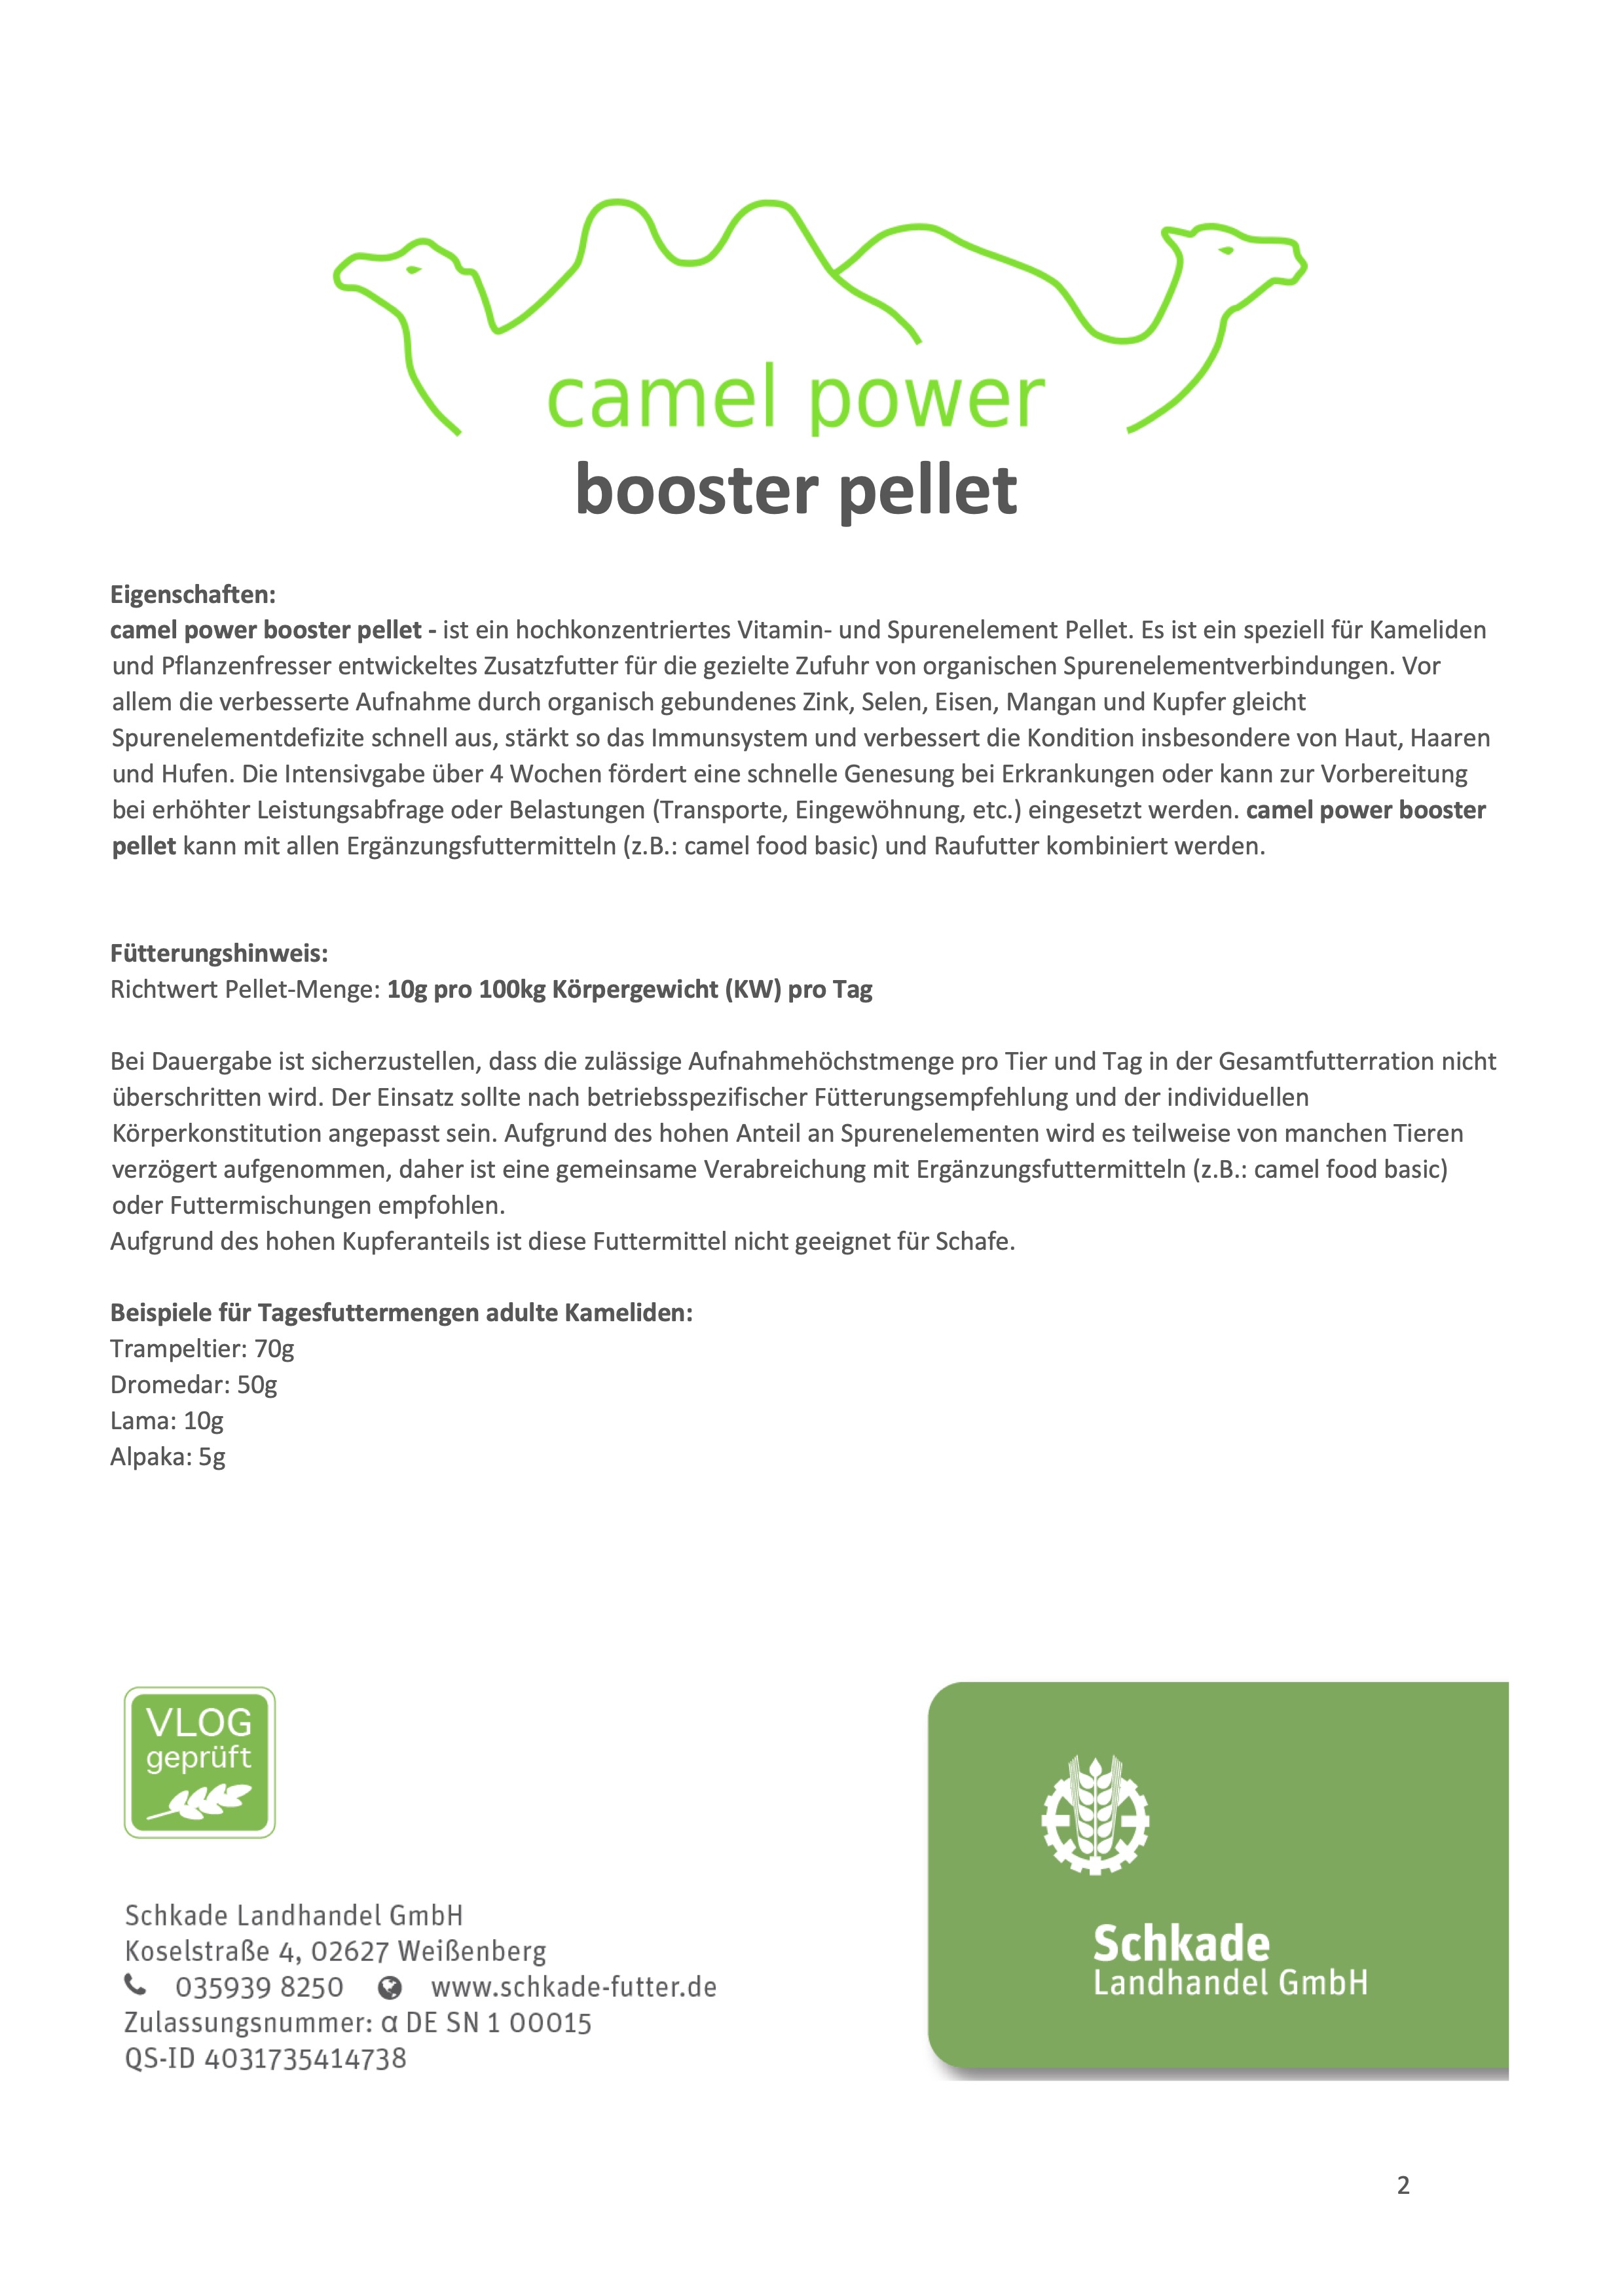 camel power - booster pellet